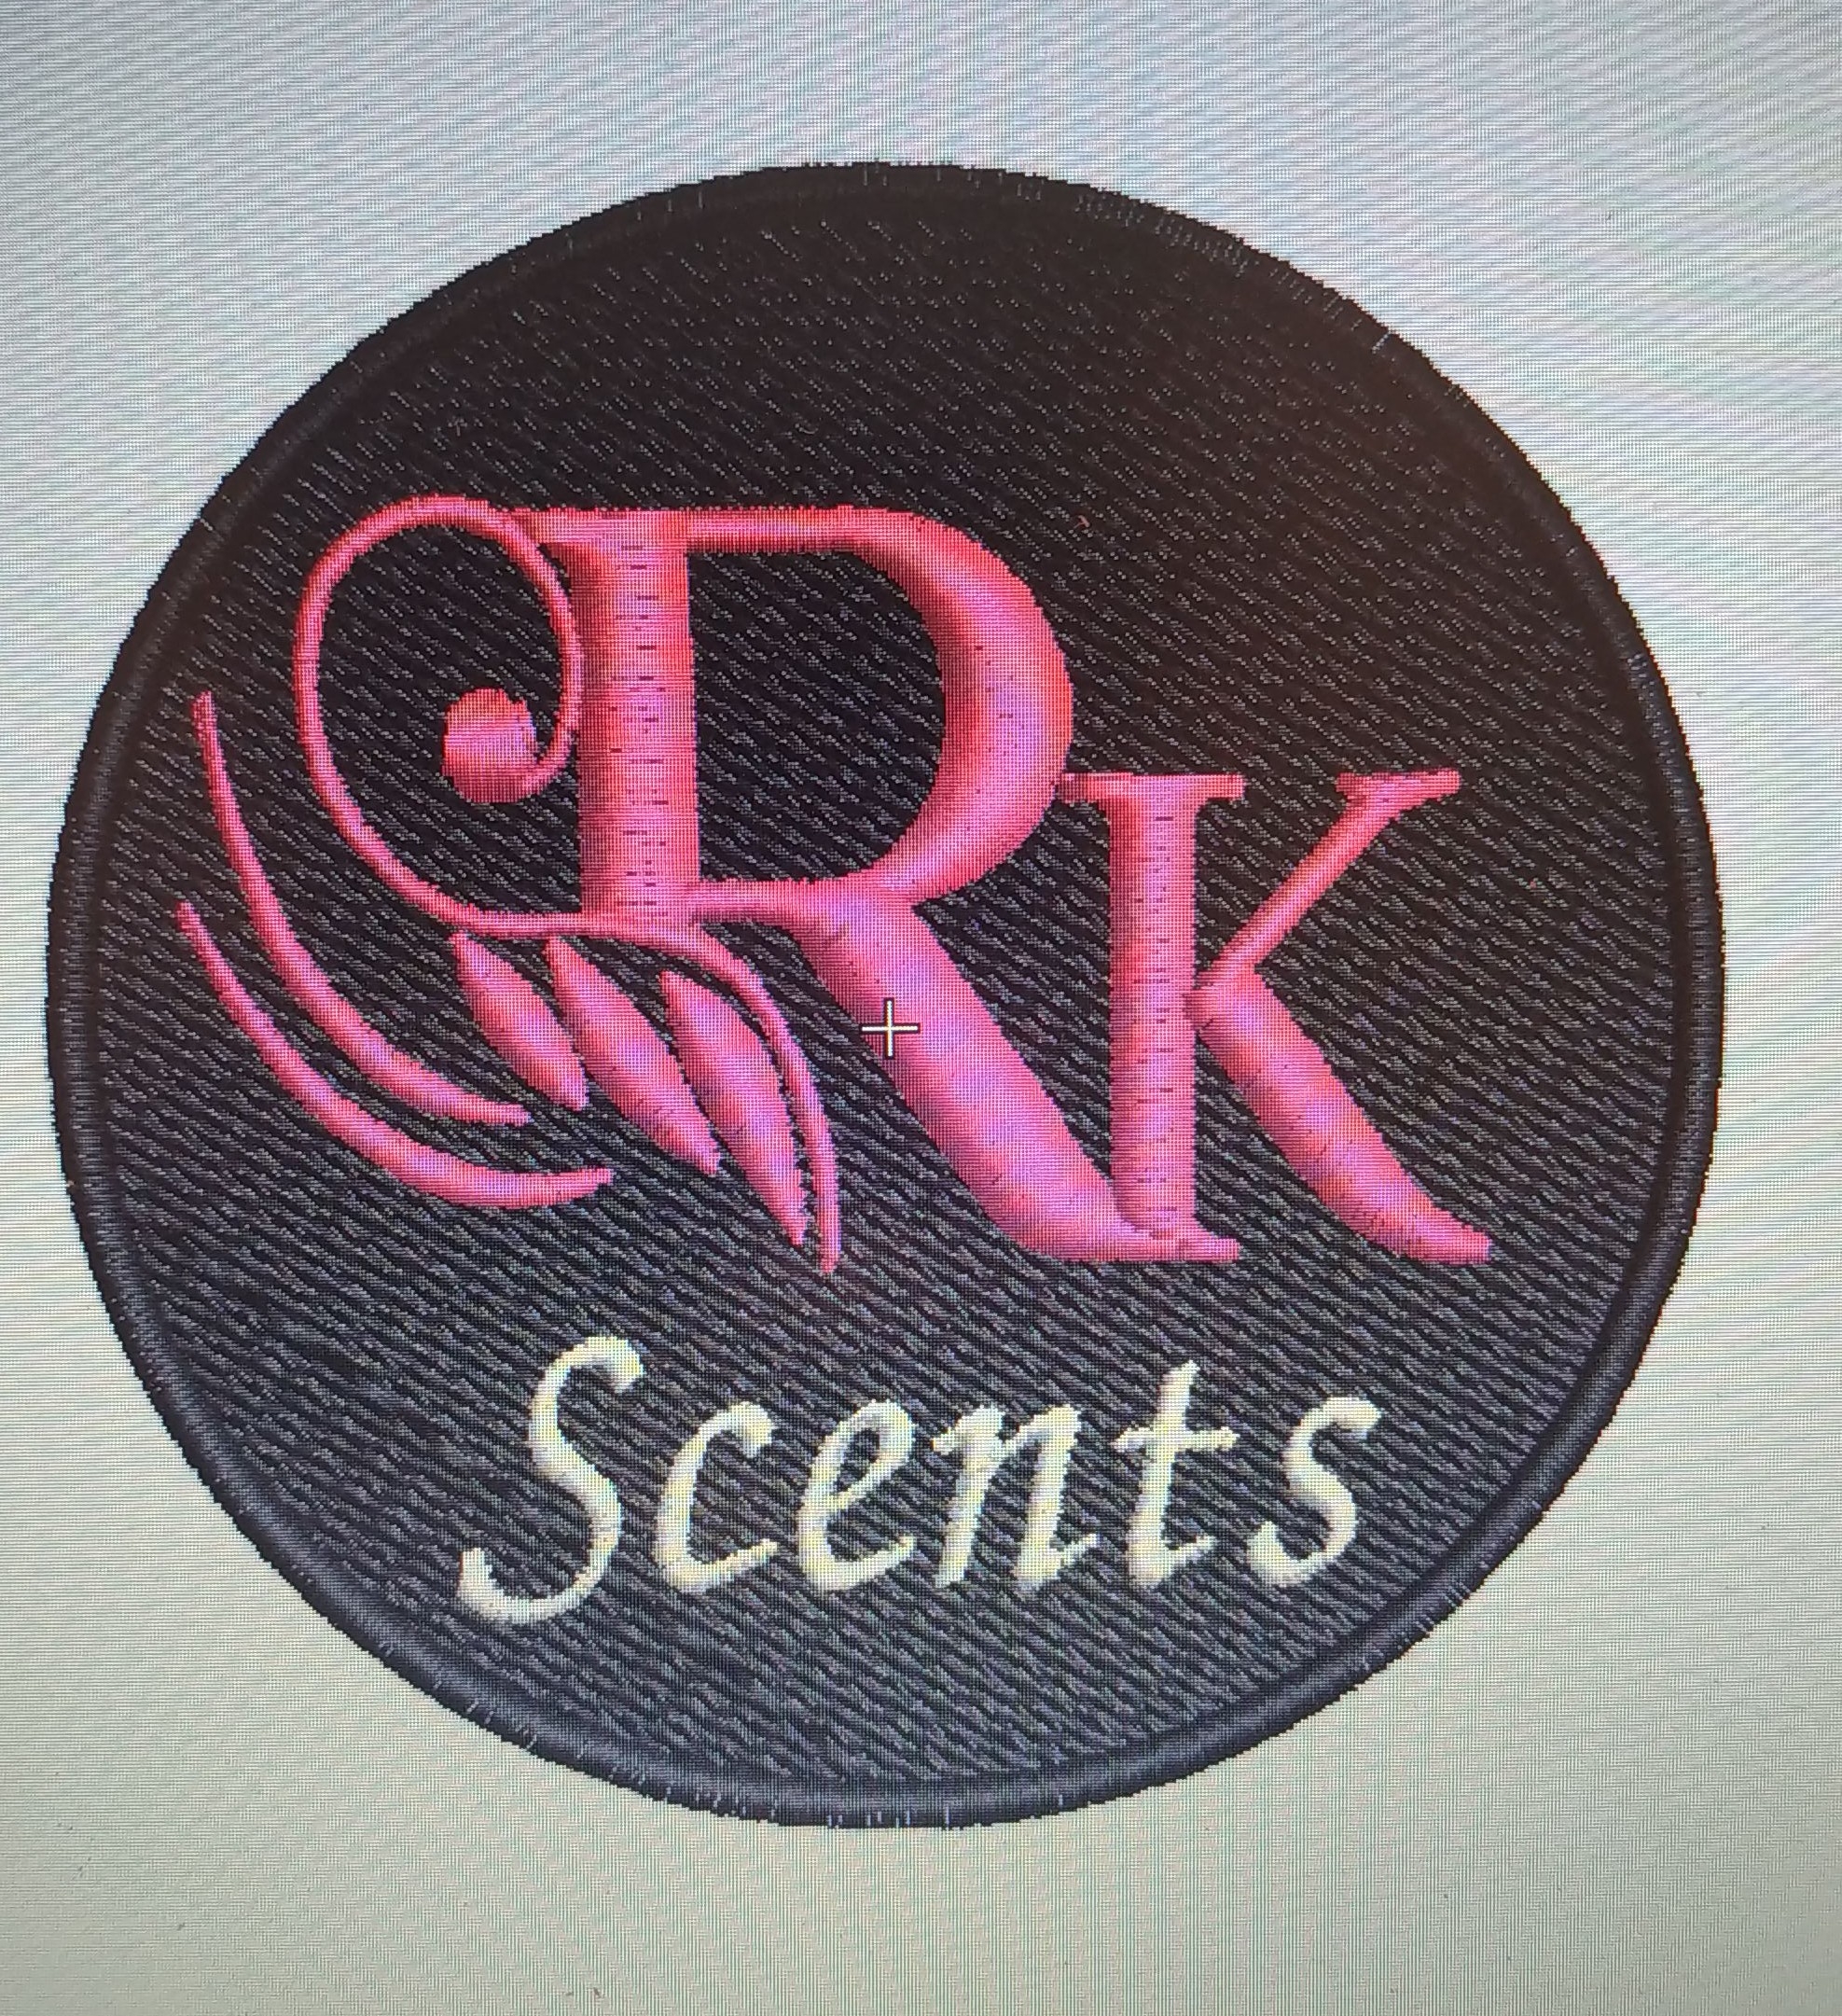 Rk Scents logo